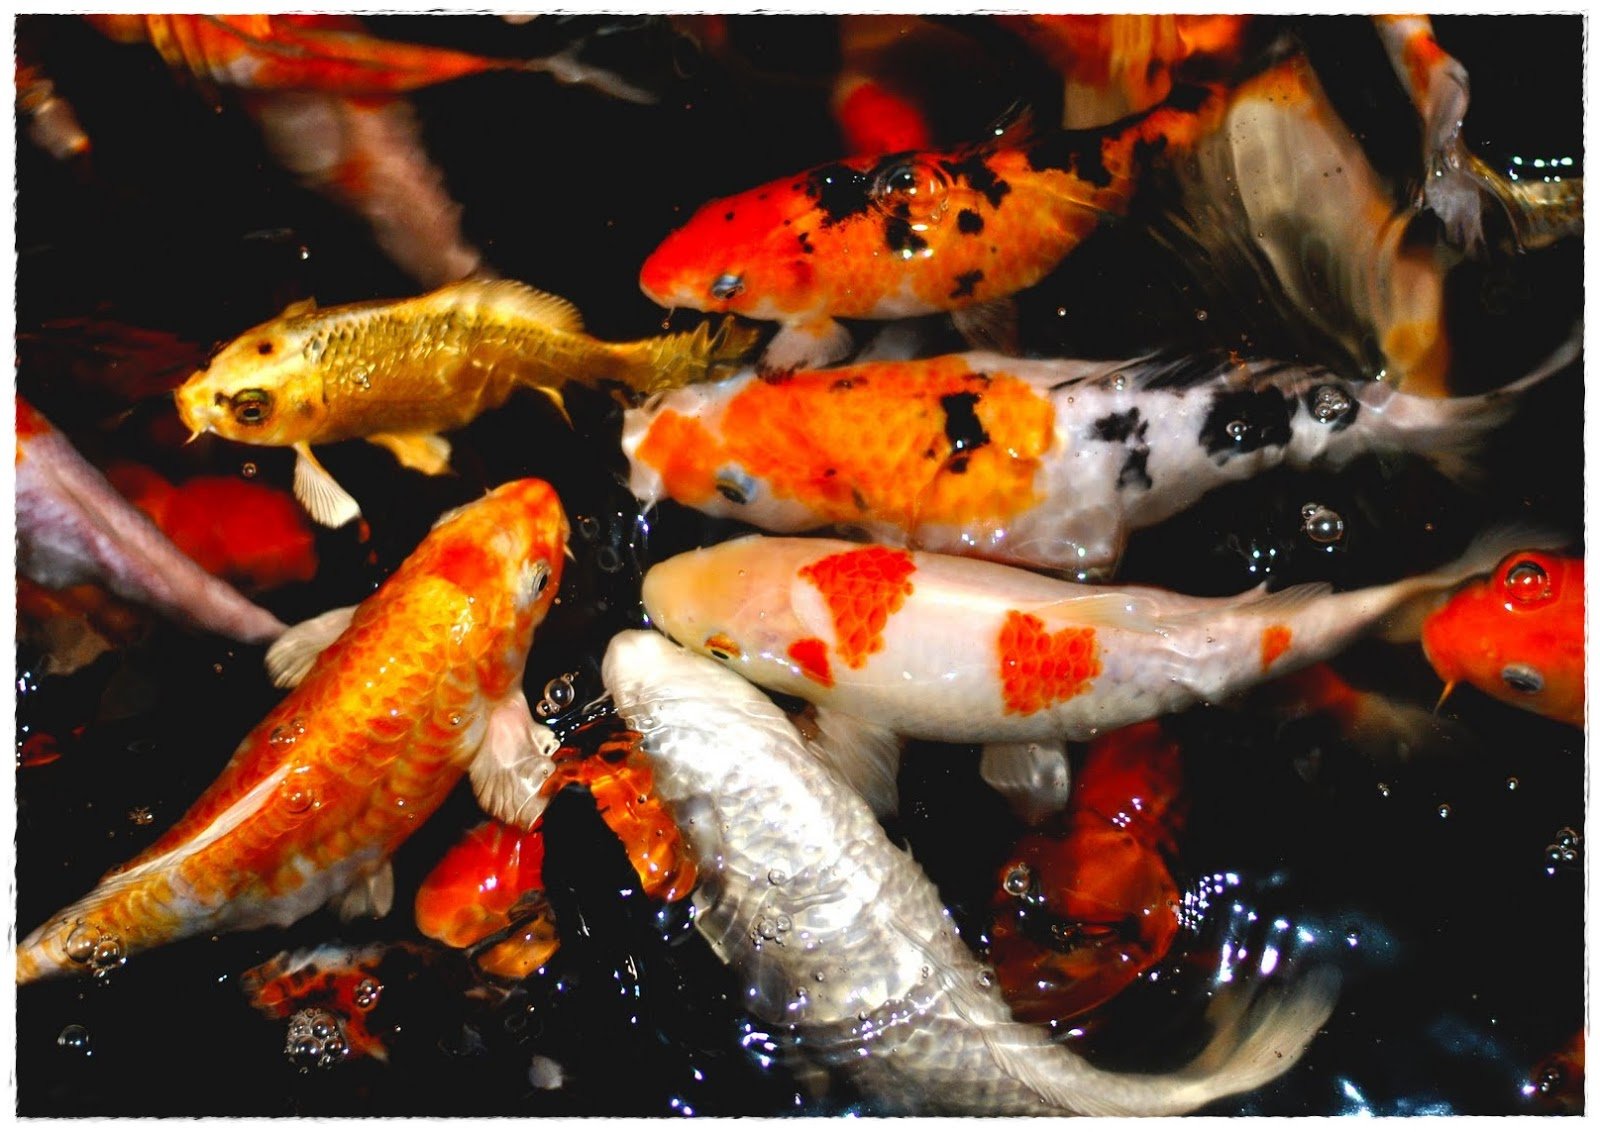 Код богатства рыбы. Карп кои золотой вуалевый. Карпы кои. Карп-кои (Cyprinus Carpio) аквариум.